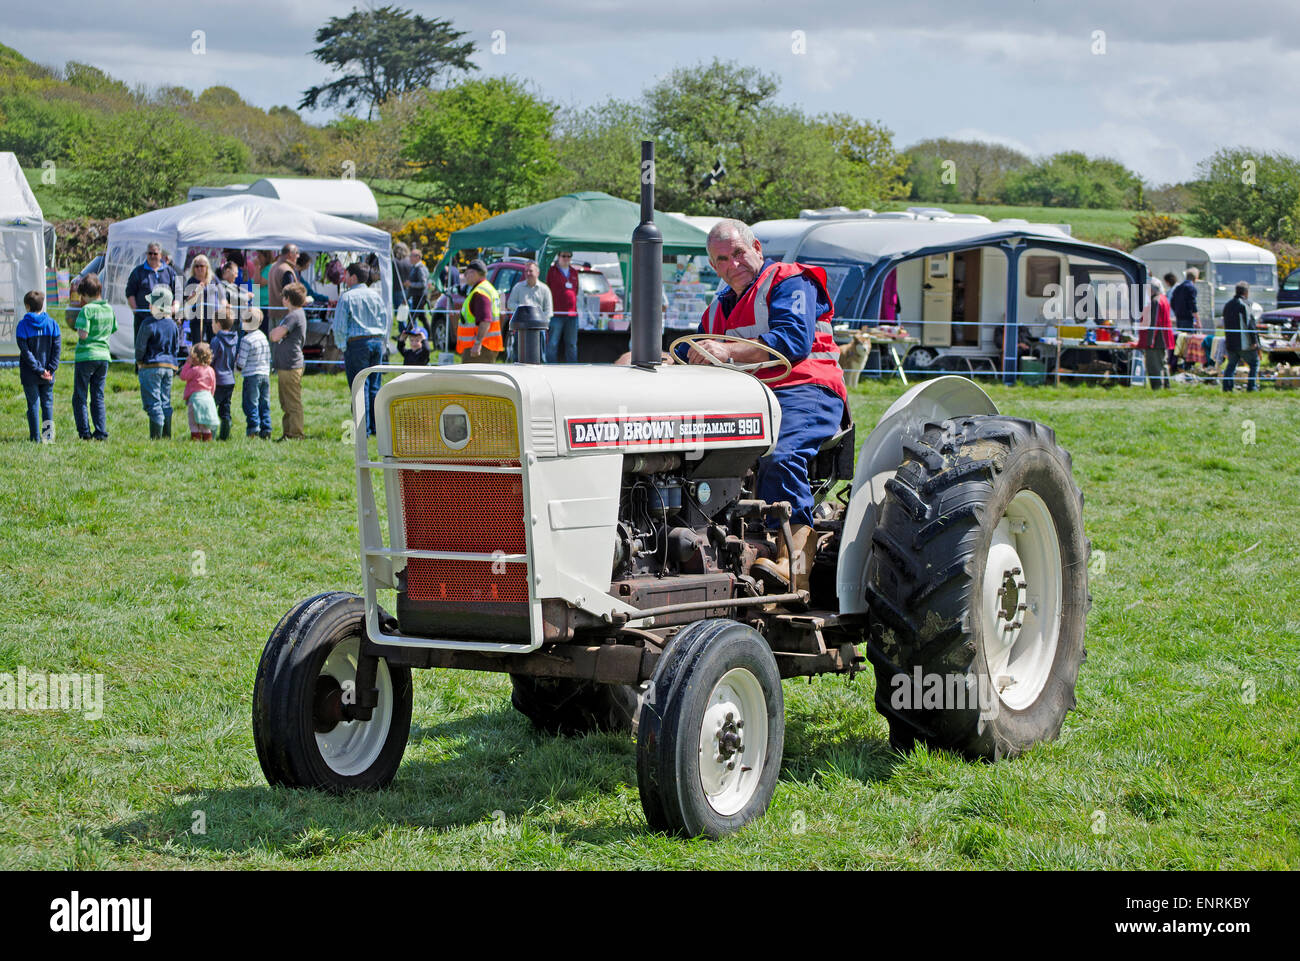 Vintage traktor rallye -Fotos und -Bildmaterial in hoher Auflösung – Alamy